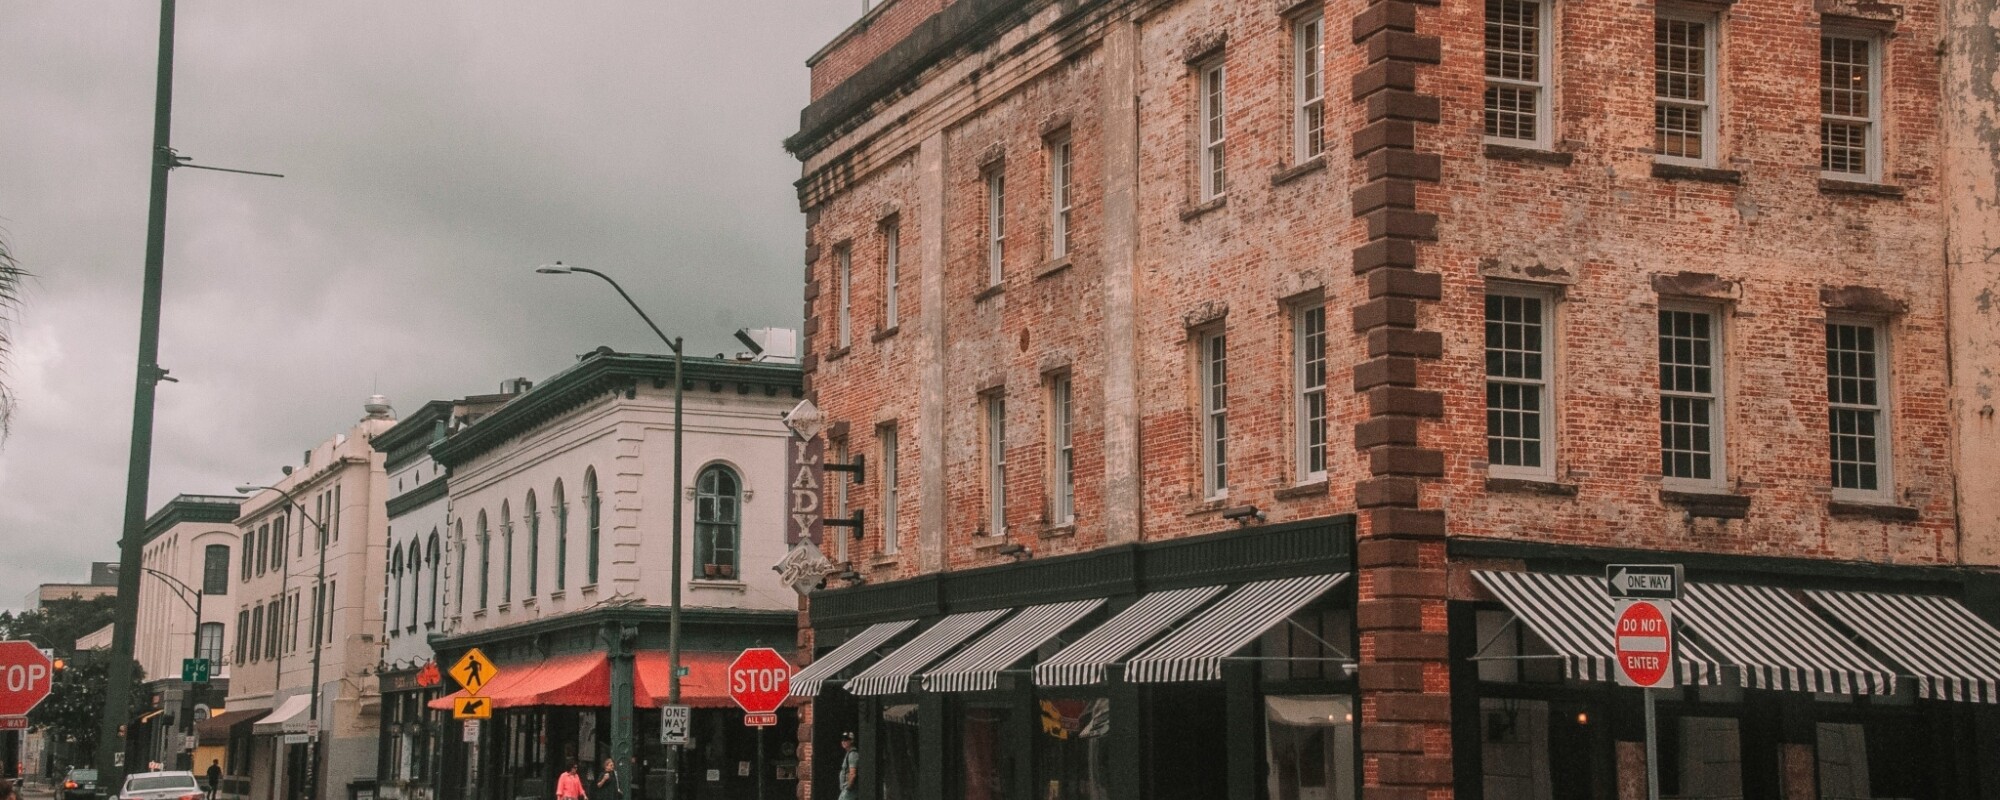 Historic brick buildings with awnings in Savannah, Georgia